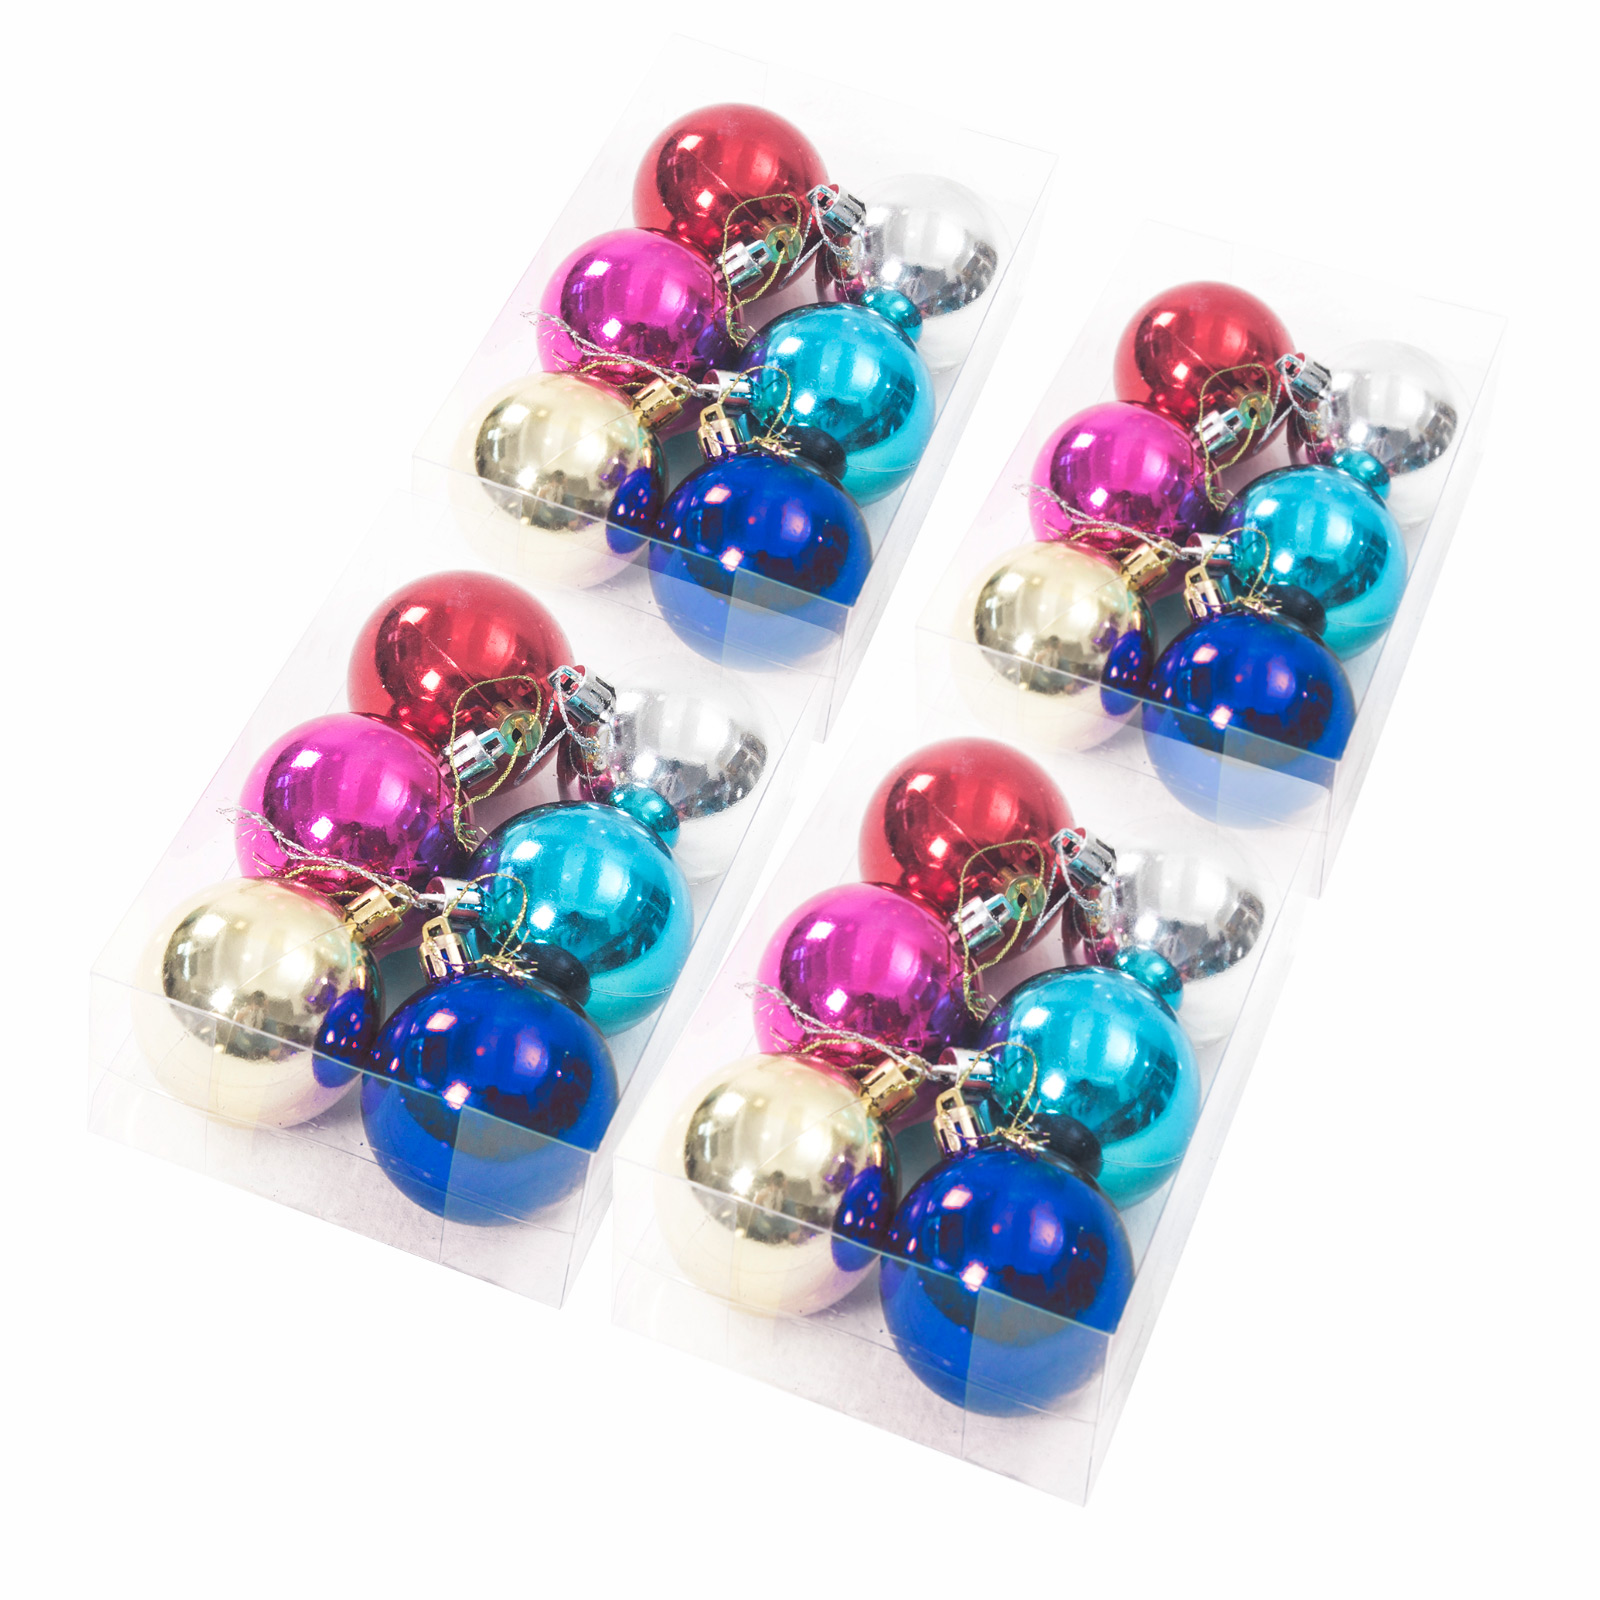 24x Christmas Balls Baubles Ornament